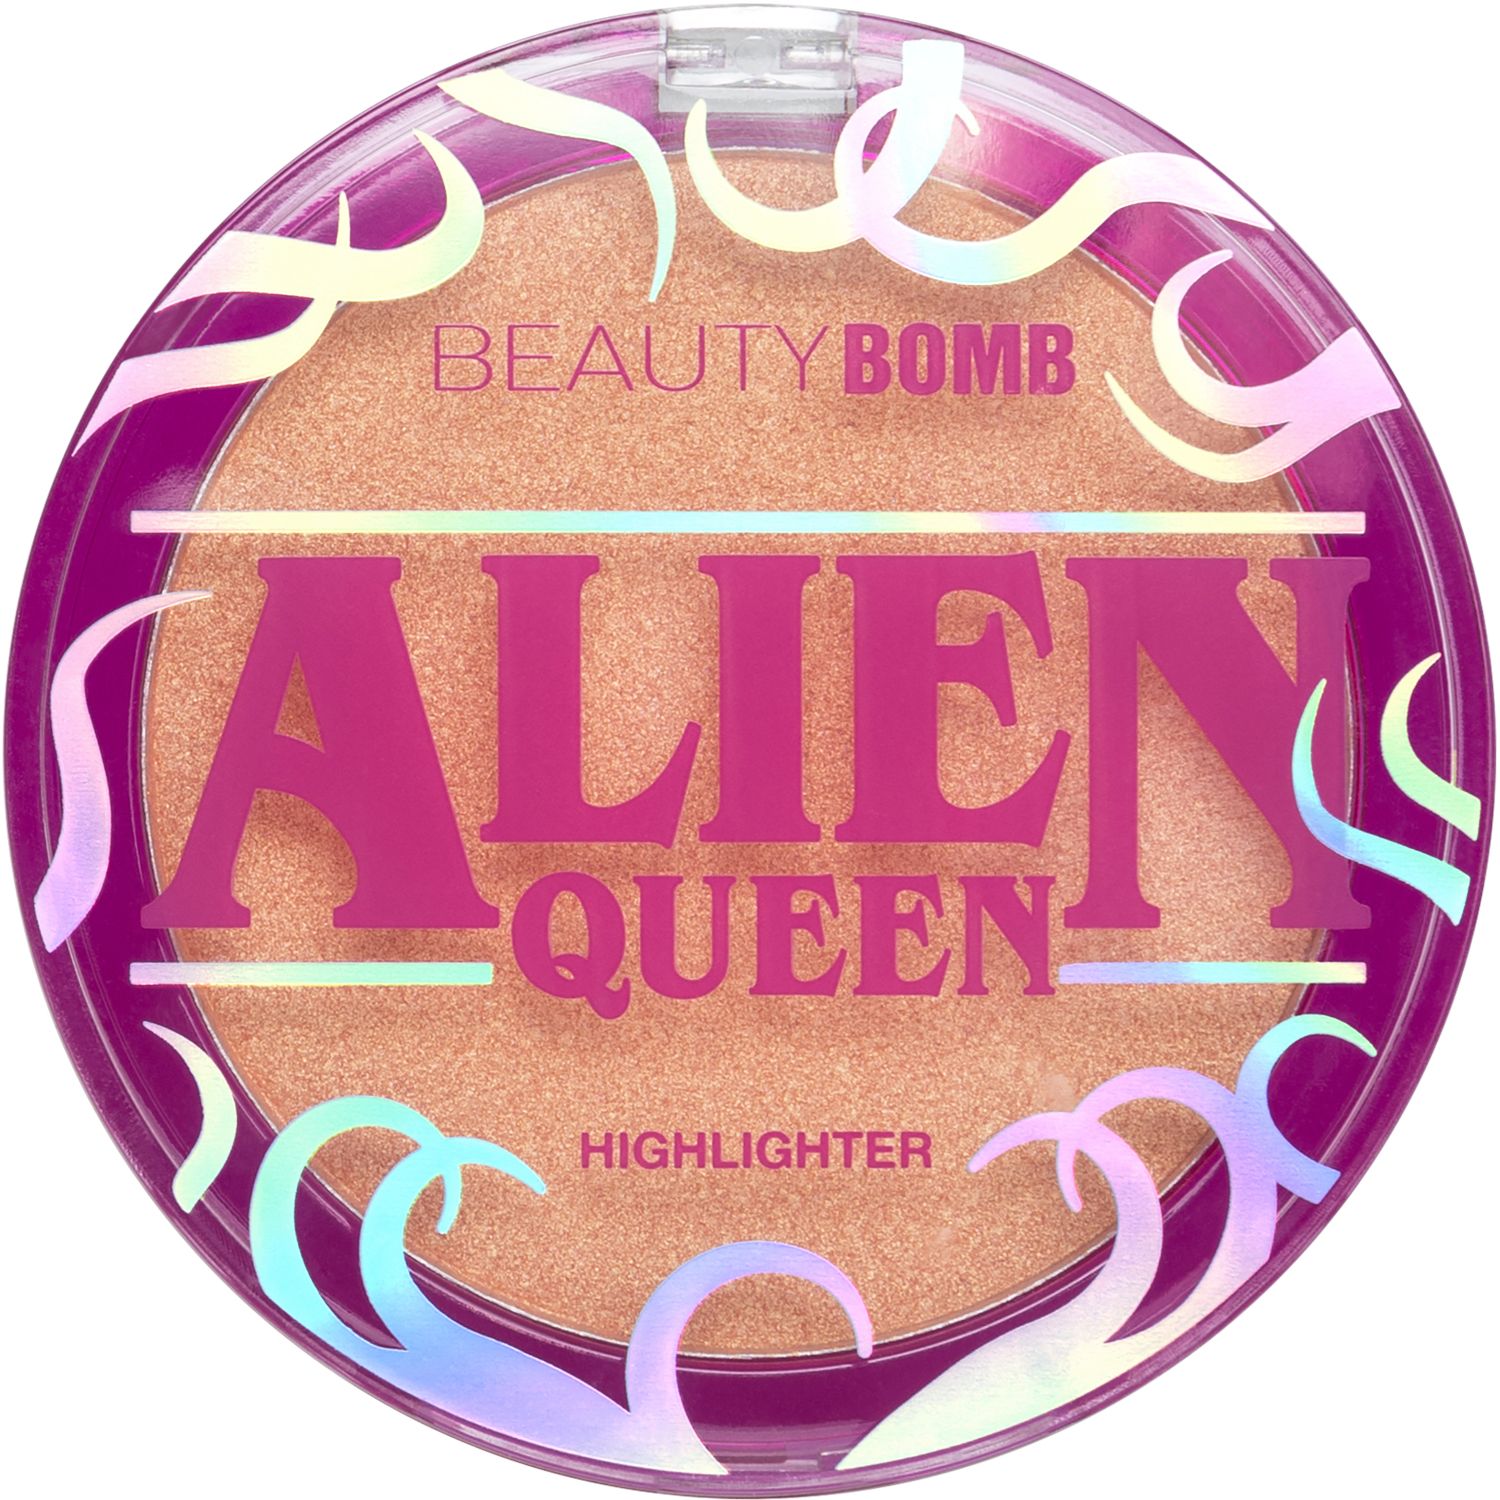 Хайлайтер Beauty Bomb Alien Queen  с золотистым сиянием, персиковый, №01, 6 г influence beauty хайлайтер с сияющими частицами lunar